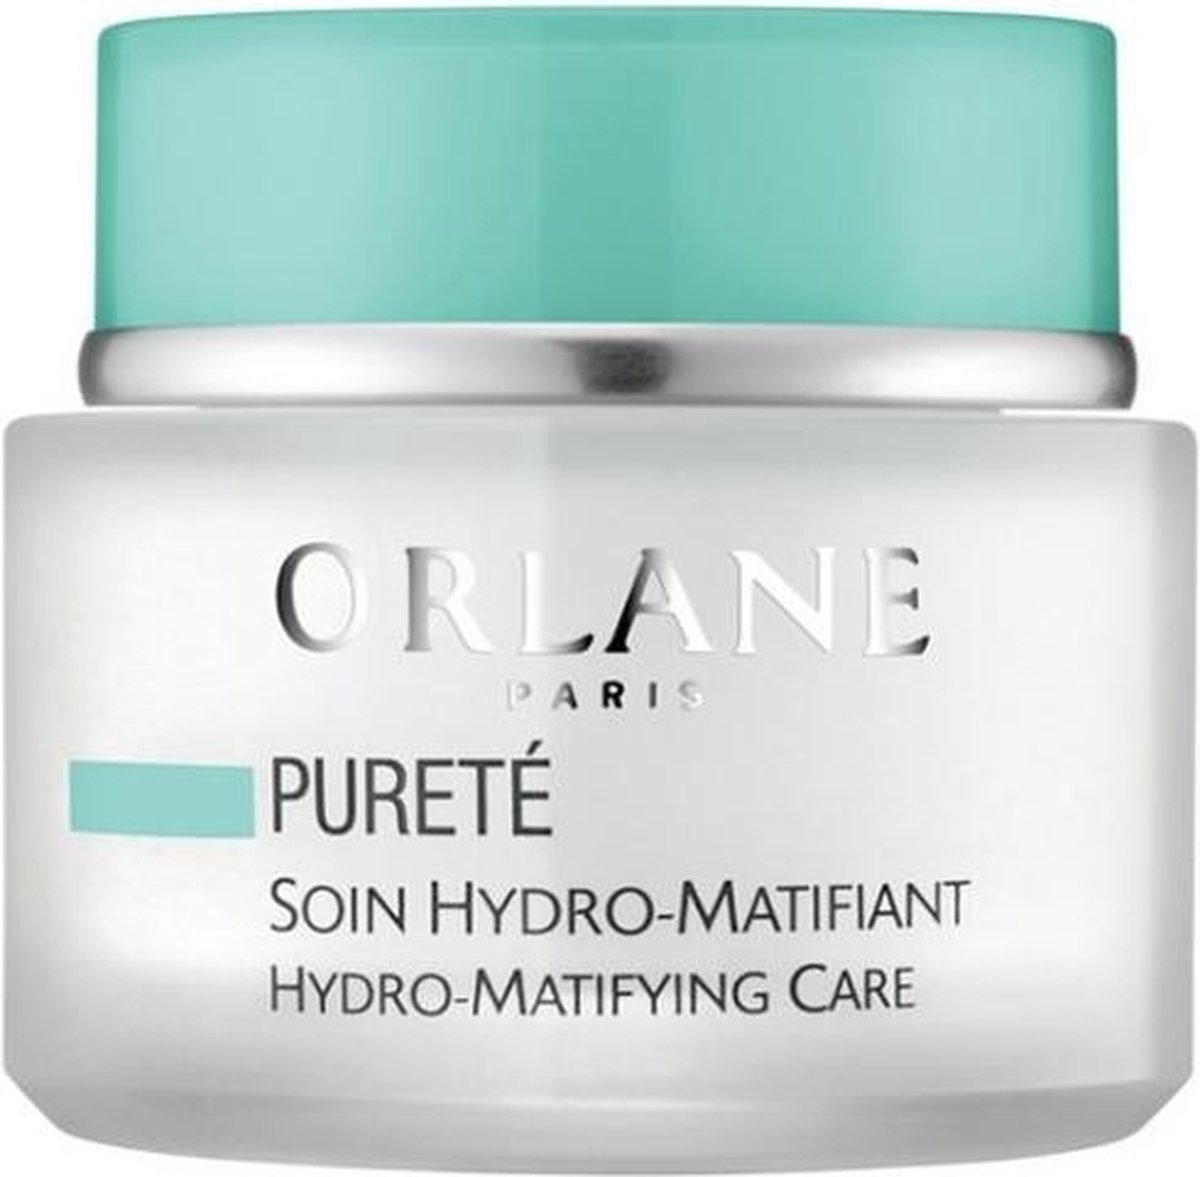 Orlane - PURETE soin hydro-matifiant 50 ml